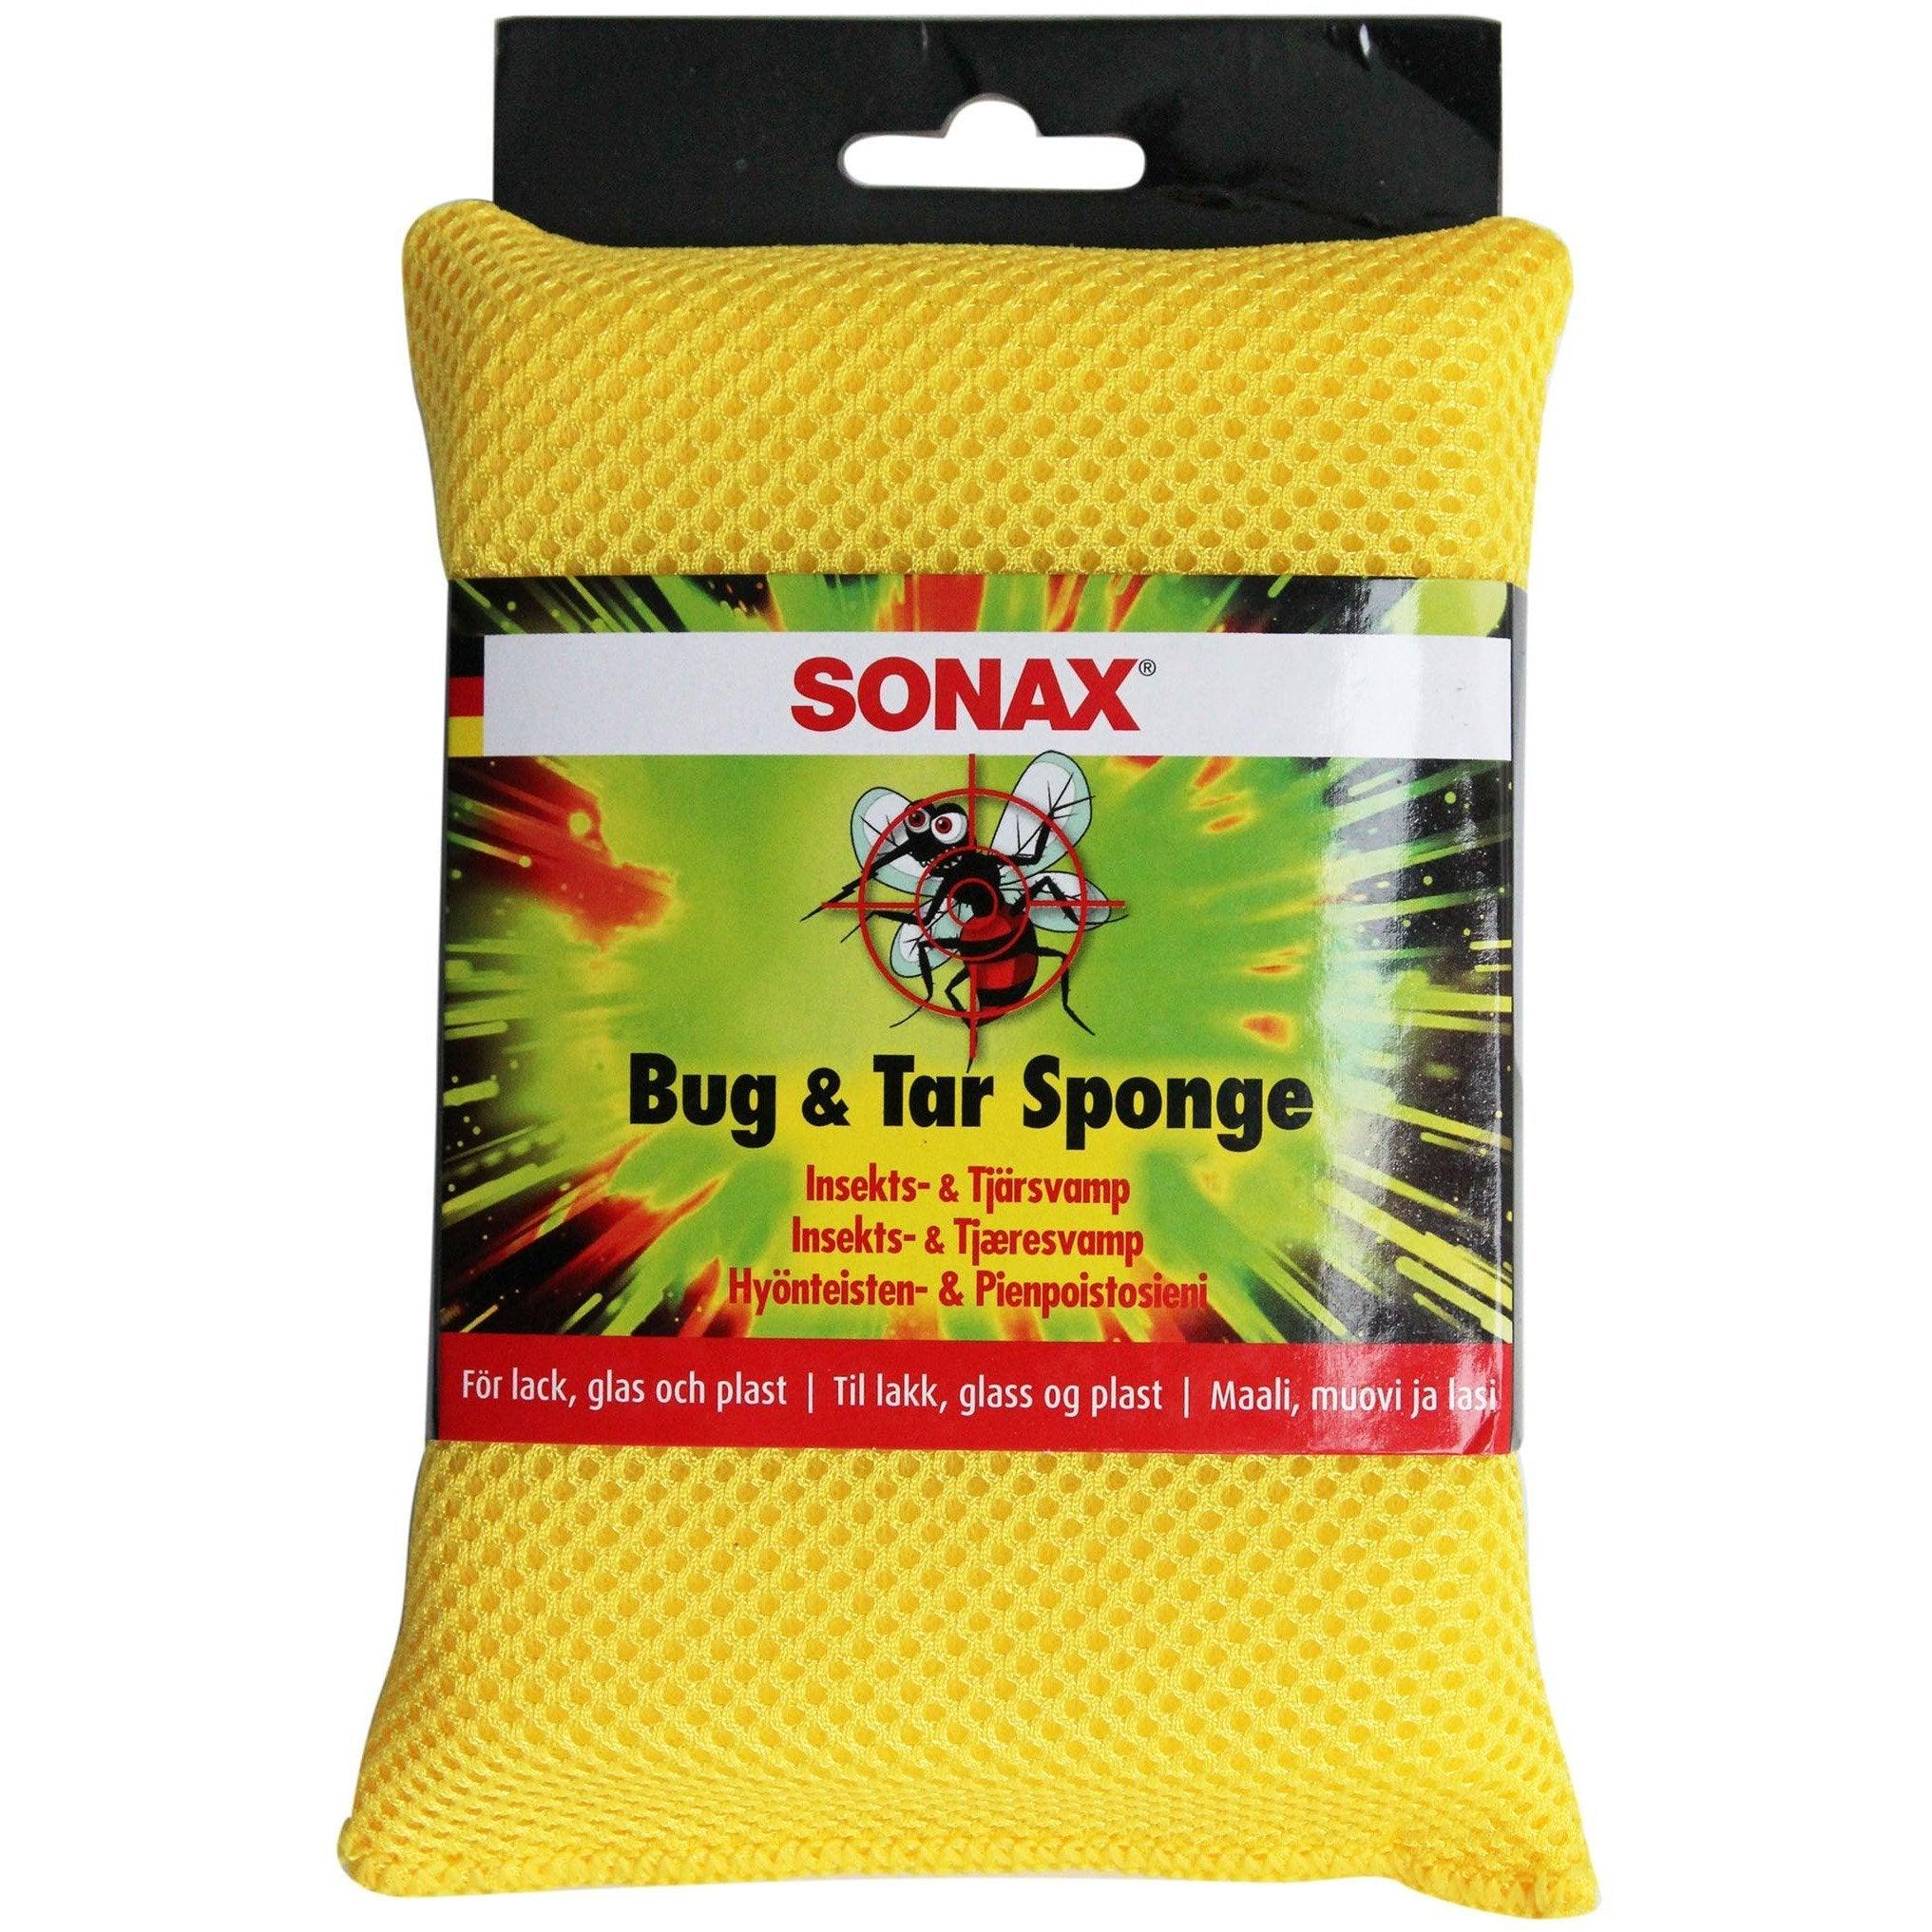 SONAX Insekt- & Tjæresvamp